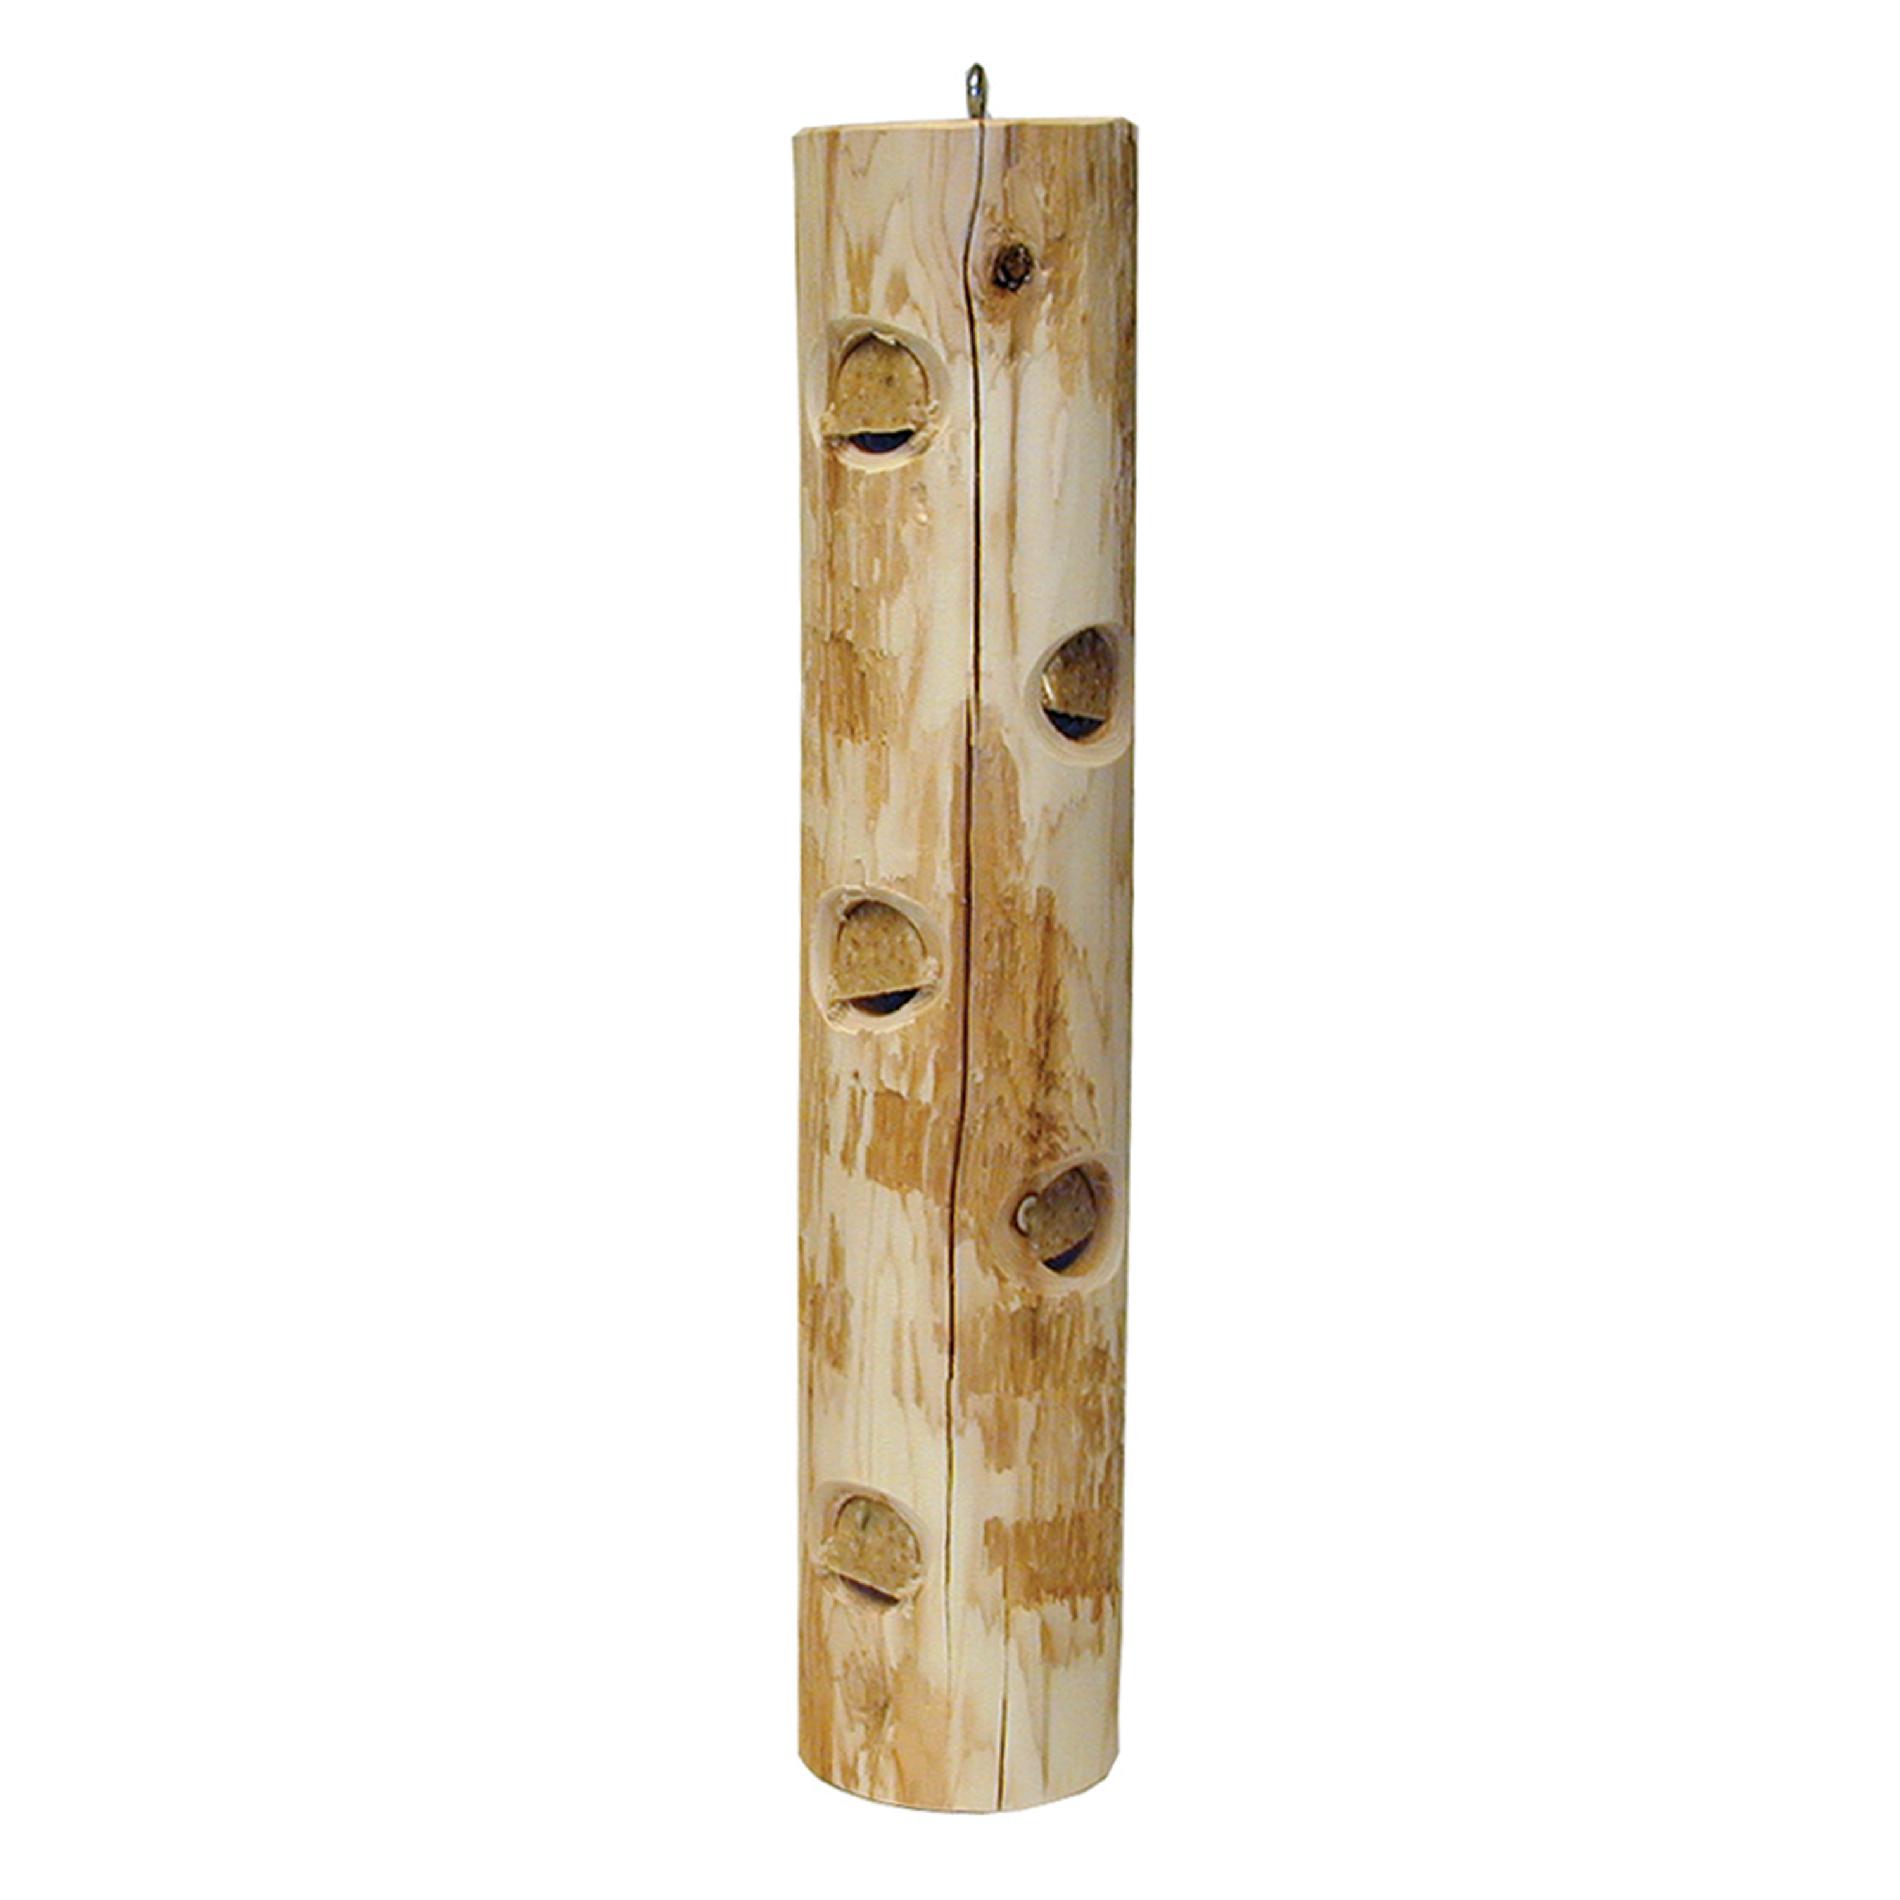 Stovall 22-inch White Cedar Suet Post Log Feeder For Suet Plugs